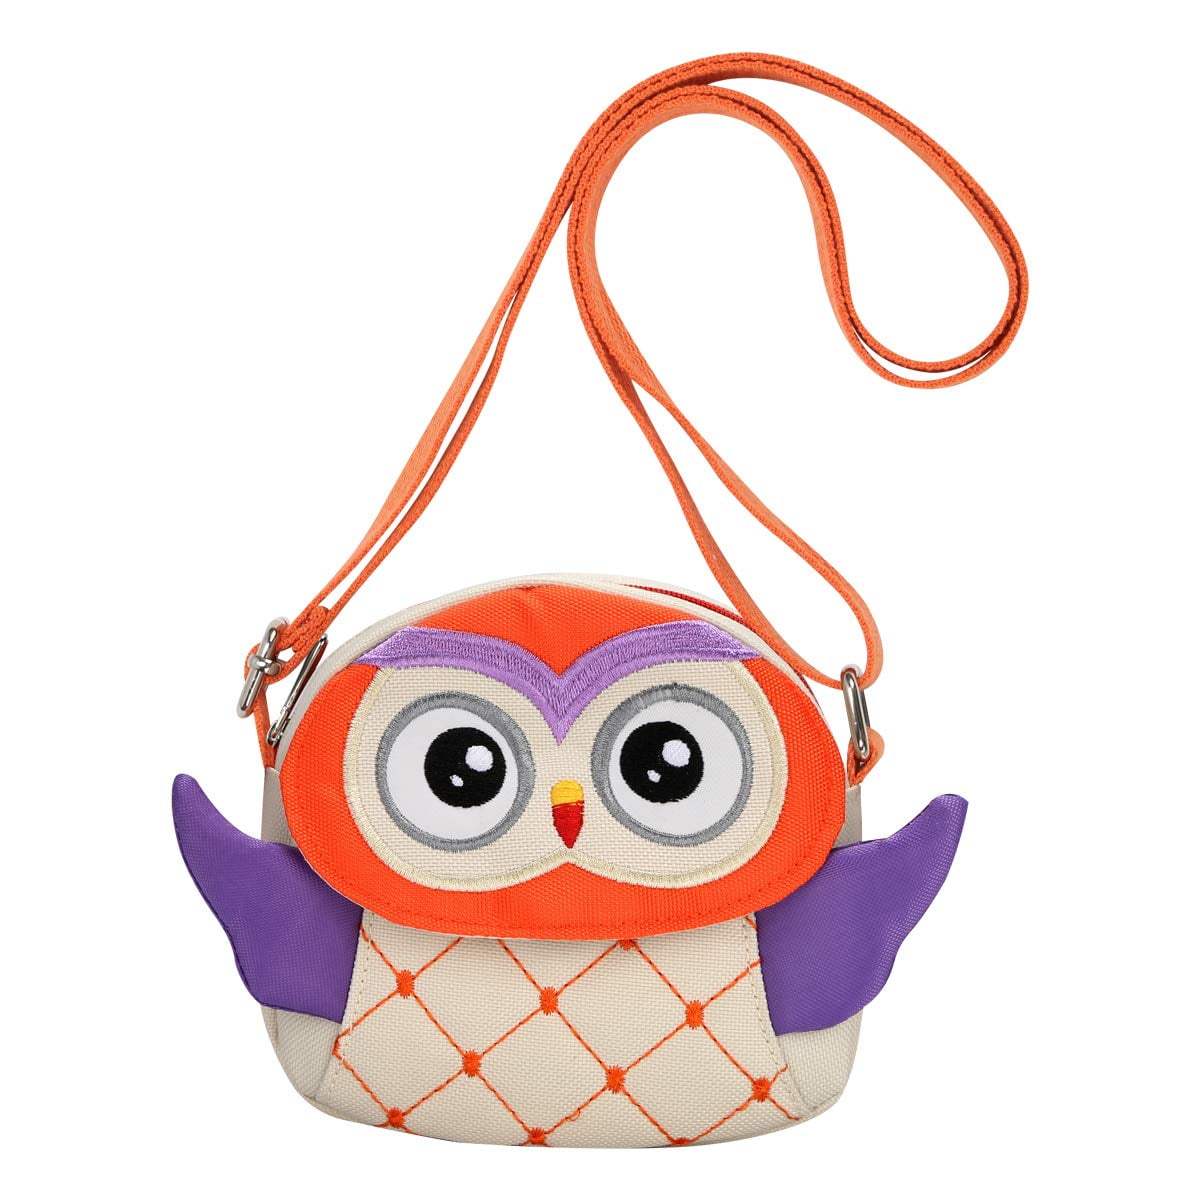 Little Girl Purses Mini Cute Princess Handbags Shoulder Messenger Bag Toys Gifts Crossbody Purse Lavender,One size 